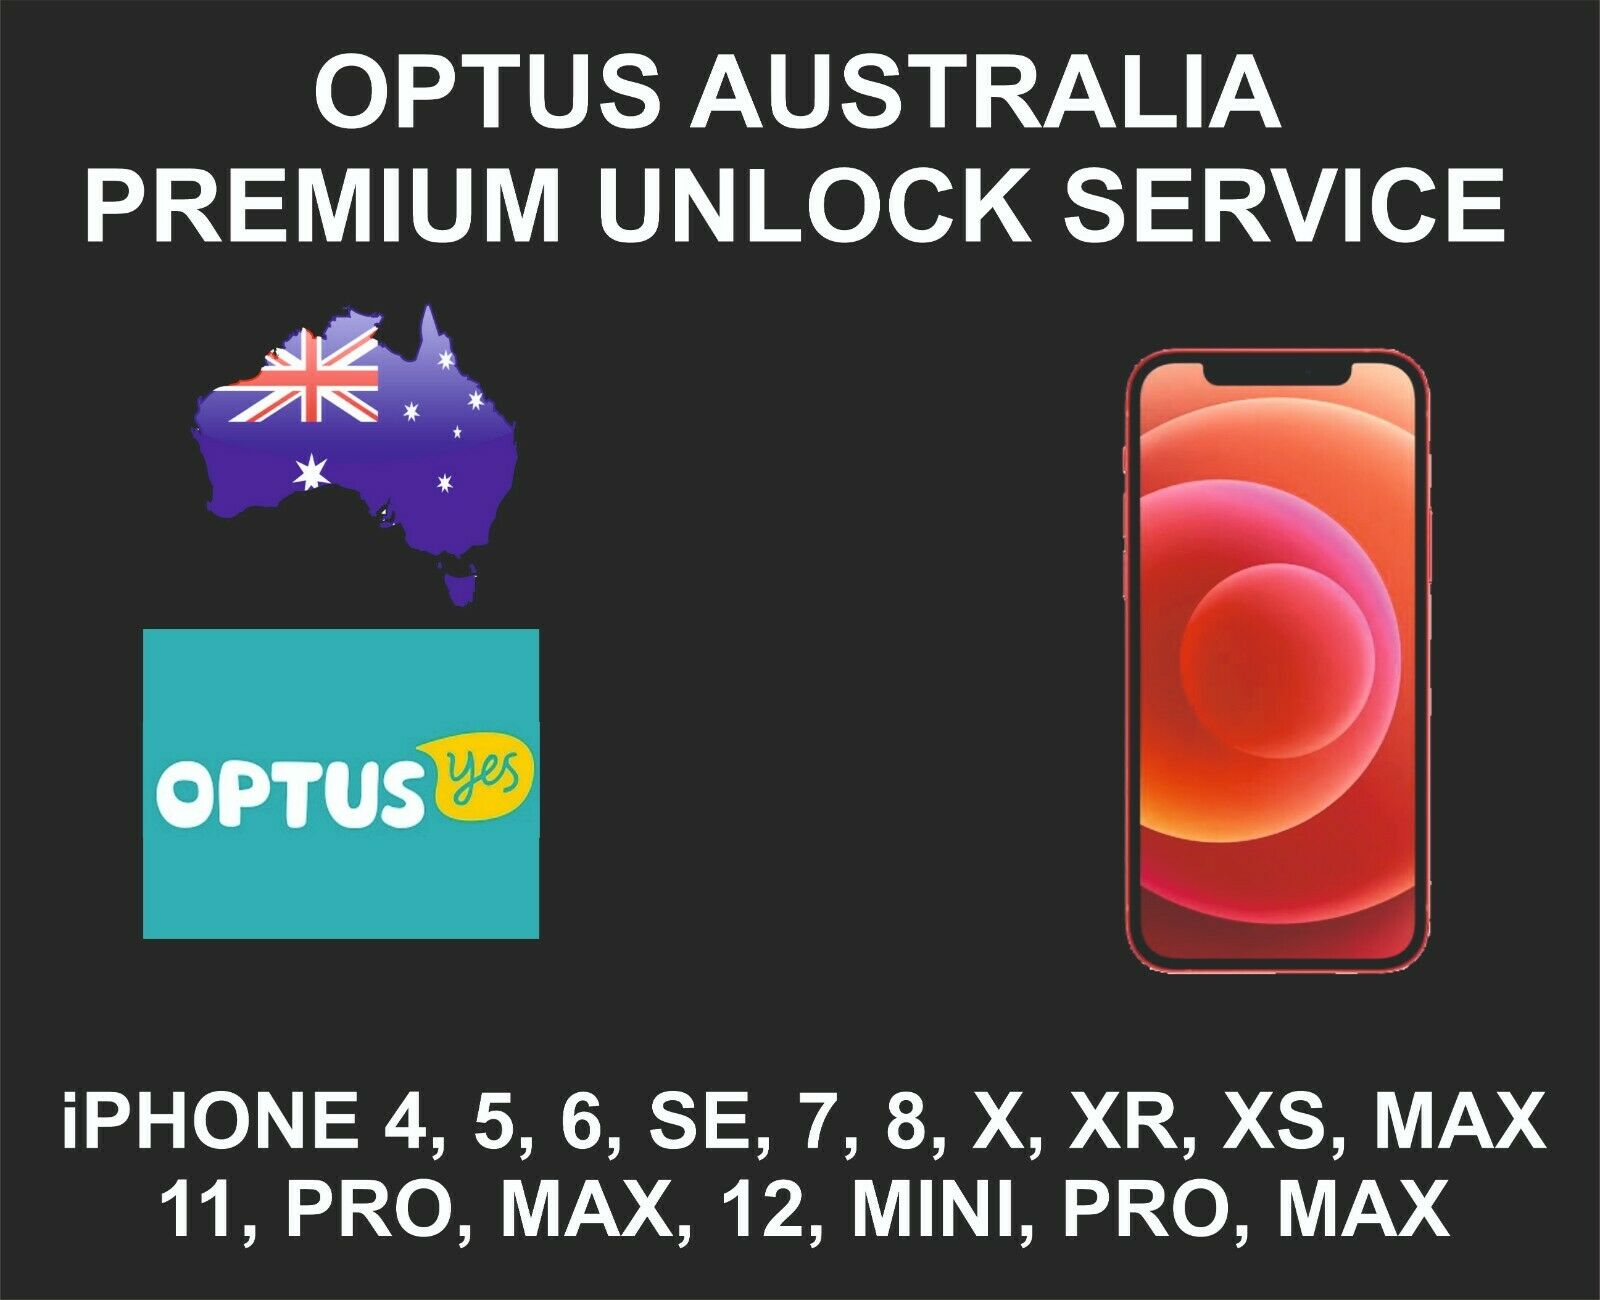 Optus Australia Premium Unlock Service, Fits Iphone 6, 7, 8, X, Xr, Xs, 11, 12